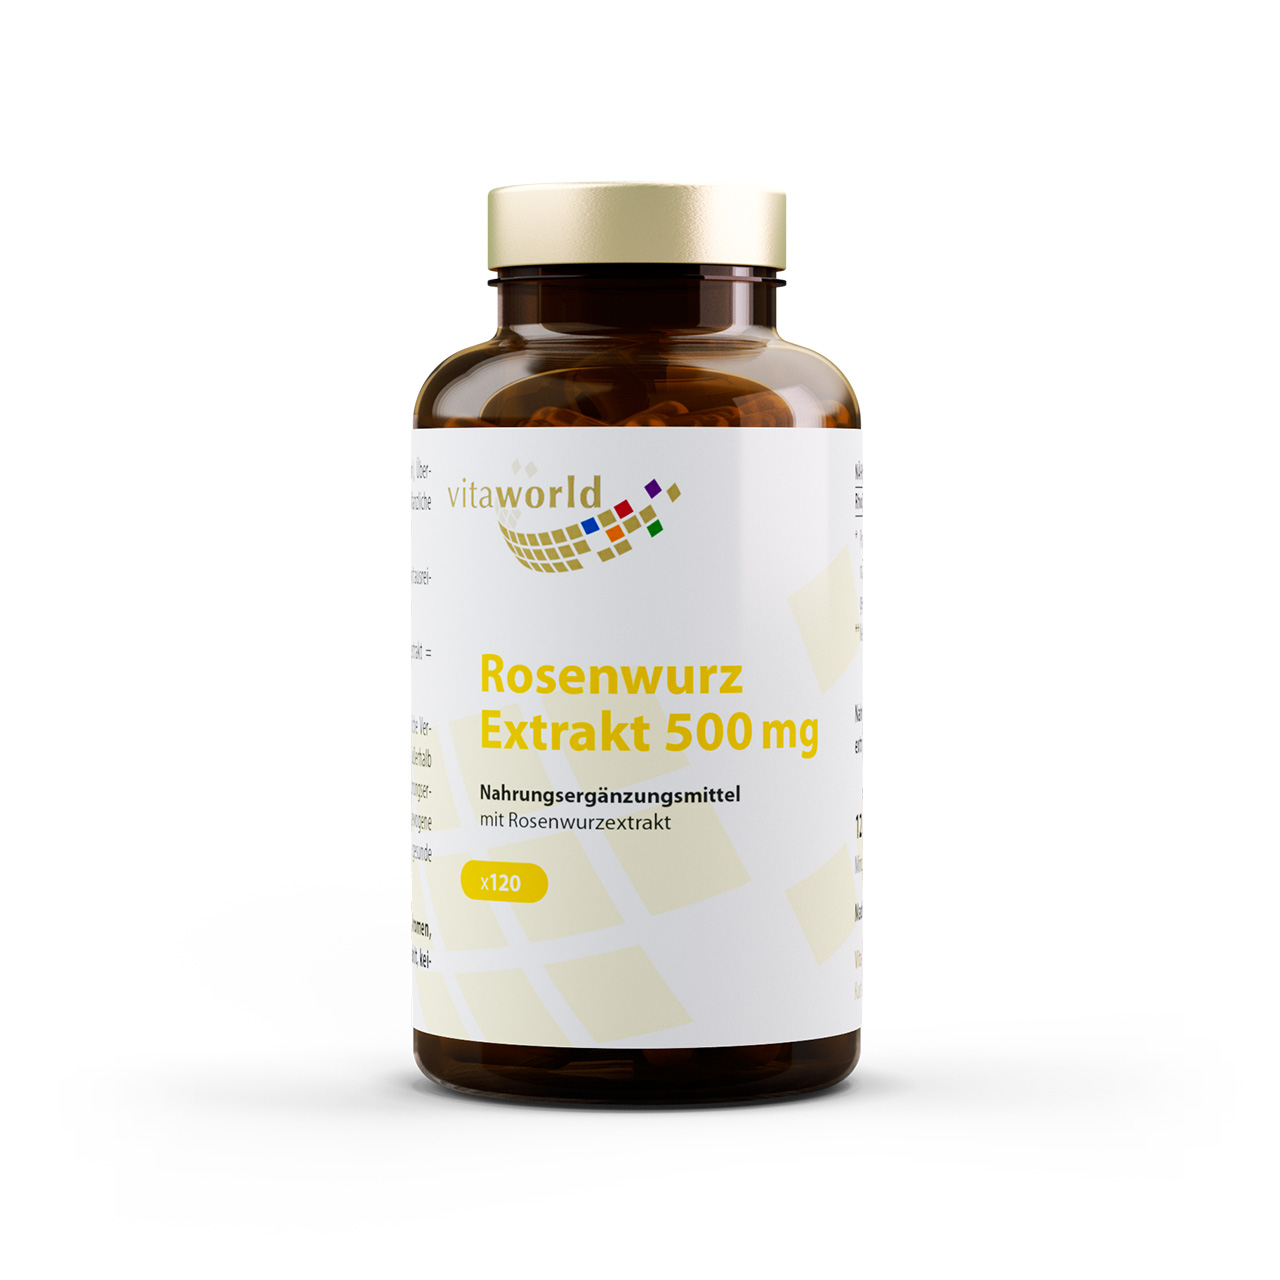 Vitaworld Rosenwurz Extrakt 500 mg | 120 Kapseln